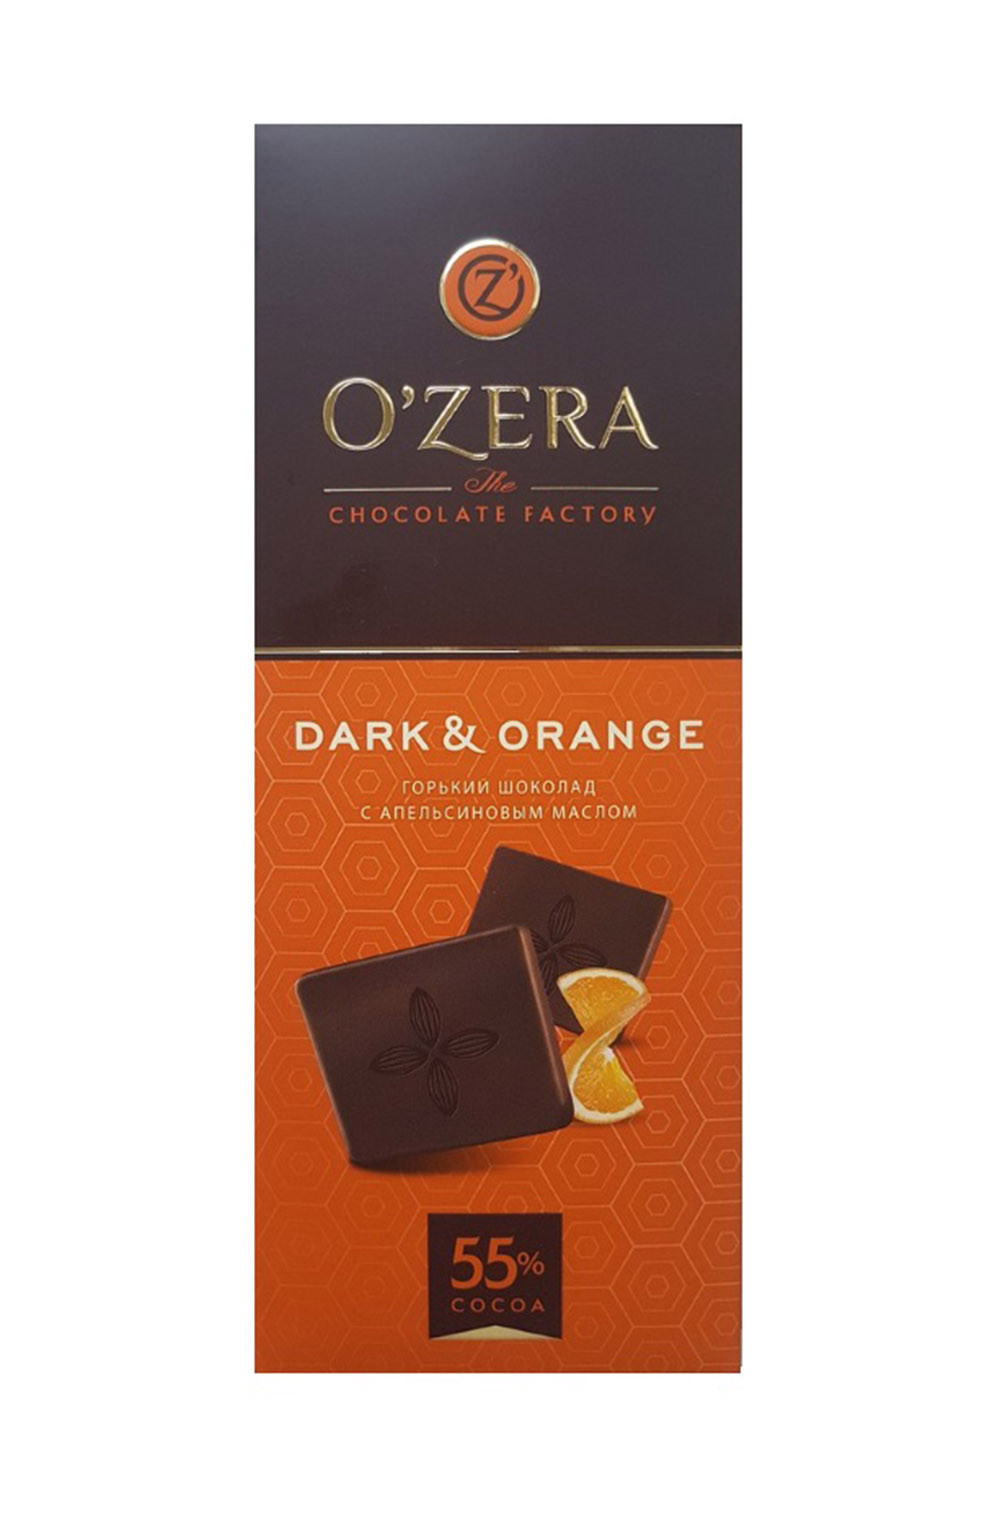 Zera шоколад. Горький шоколад Ozera. Шоколад o'Zera Горький. Ozera, шоколад Горький Dark. Шоколад o'Zera Dark.